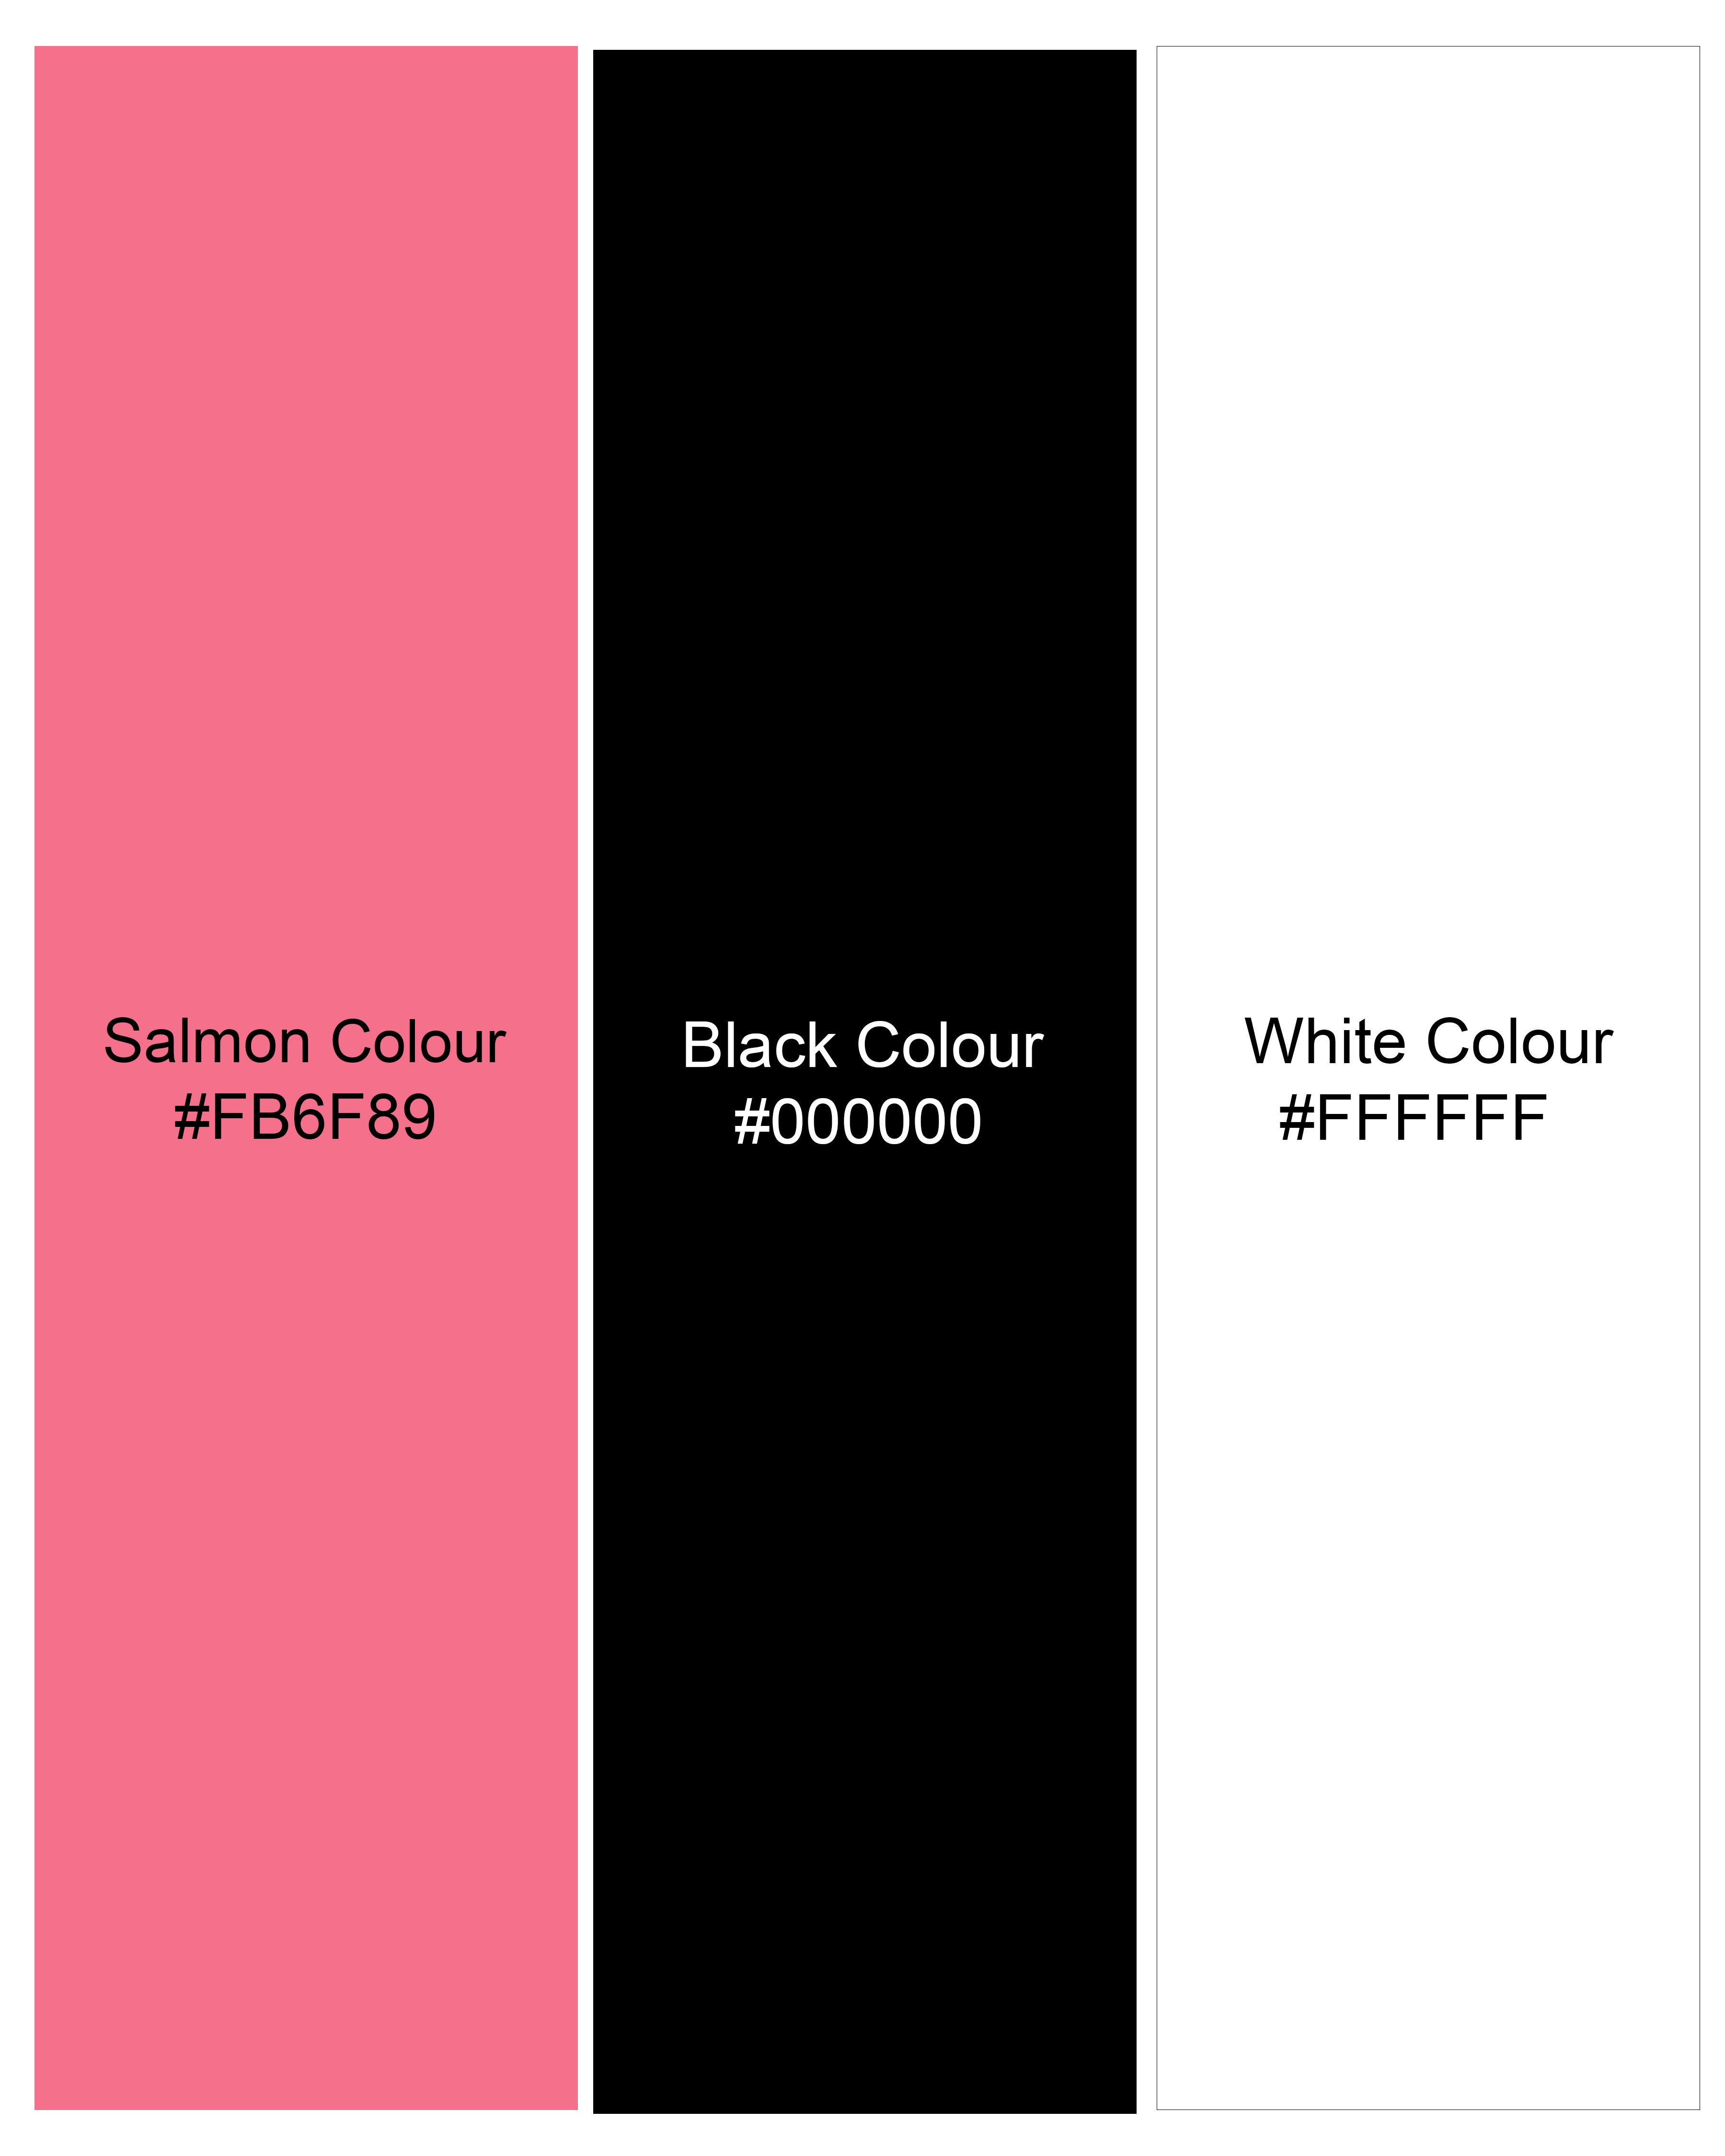 Salmon Pink Checkered Twill Premium Cotton Boxers BX442-28, BX442-30, BX442-32, BX442-34, BX442-36, BX442-38, BX442-40, BX442-42, BX442-44